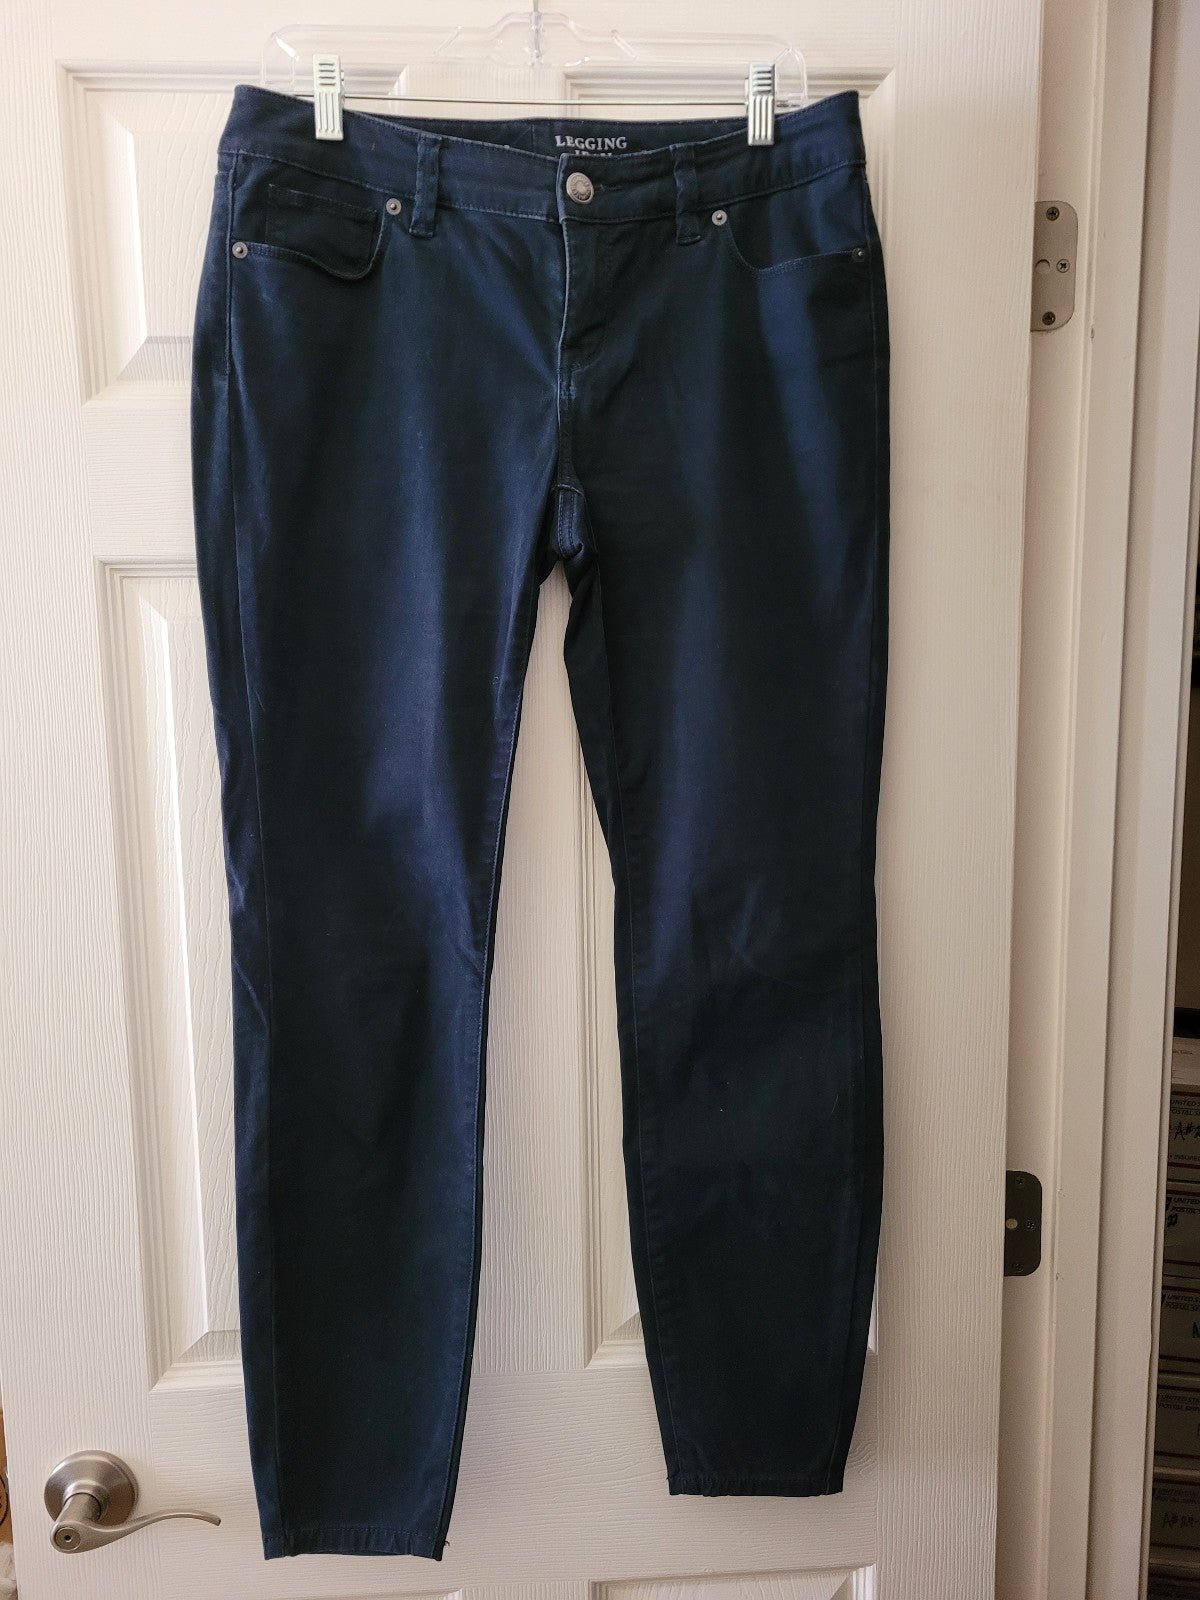 Wholesale price The Limited Legging Jeans! LIKE NEW! Size 8 Gp4uZqX2u Online Shop